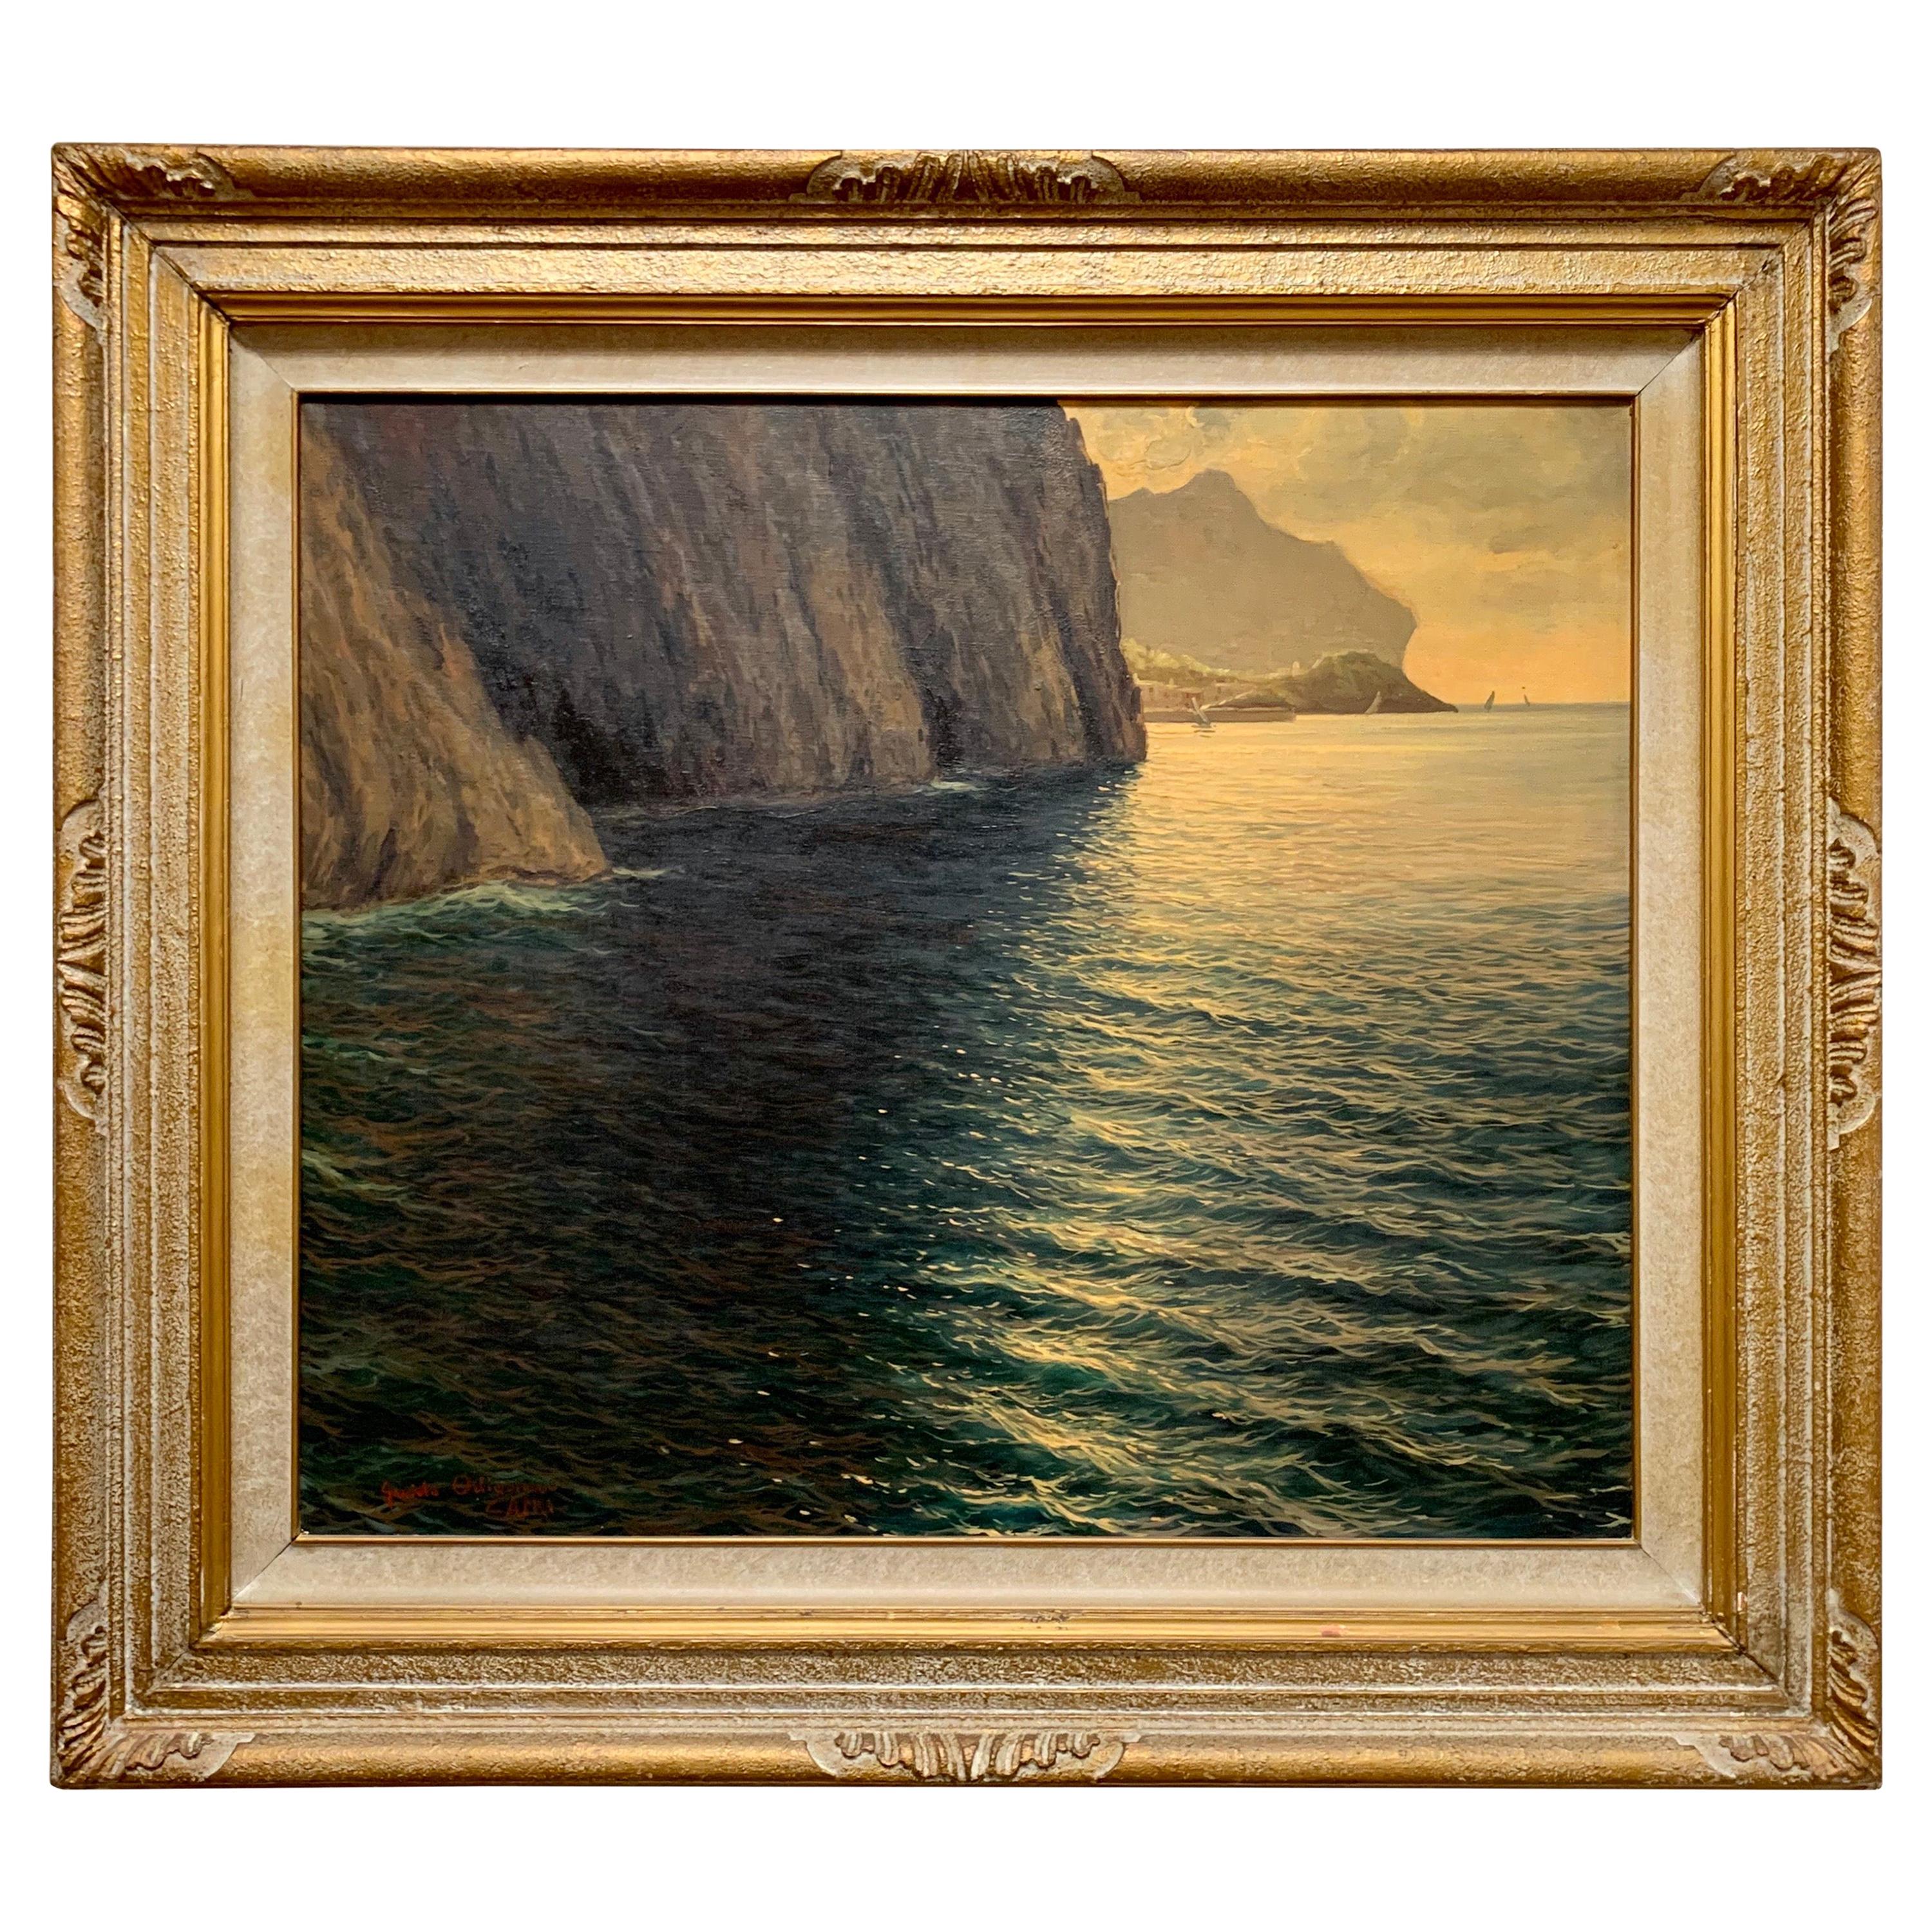 Original Signed Guido Odierna “Capri” Oil on Canvas Seascape